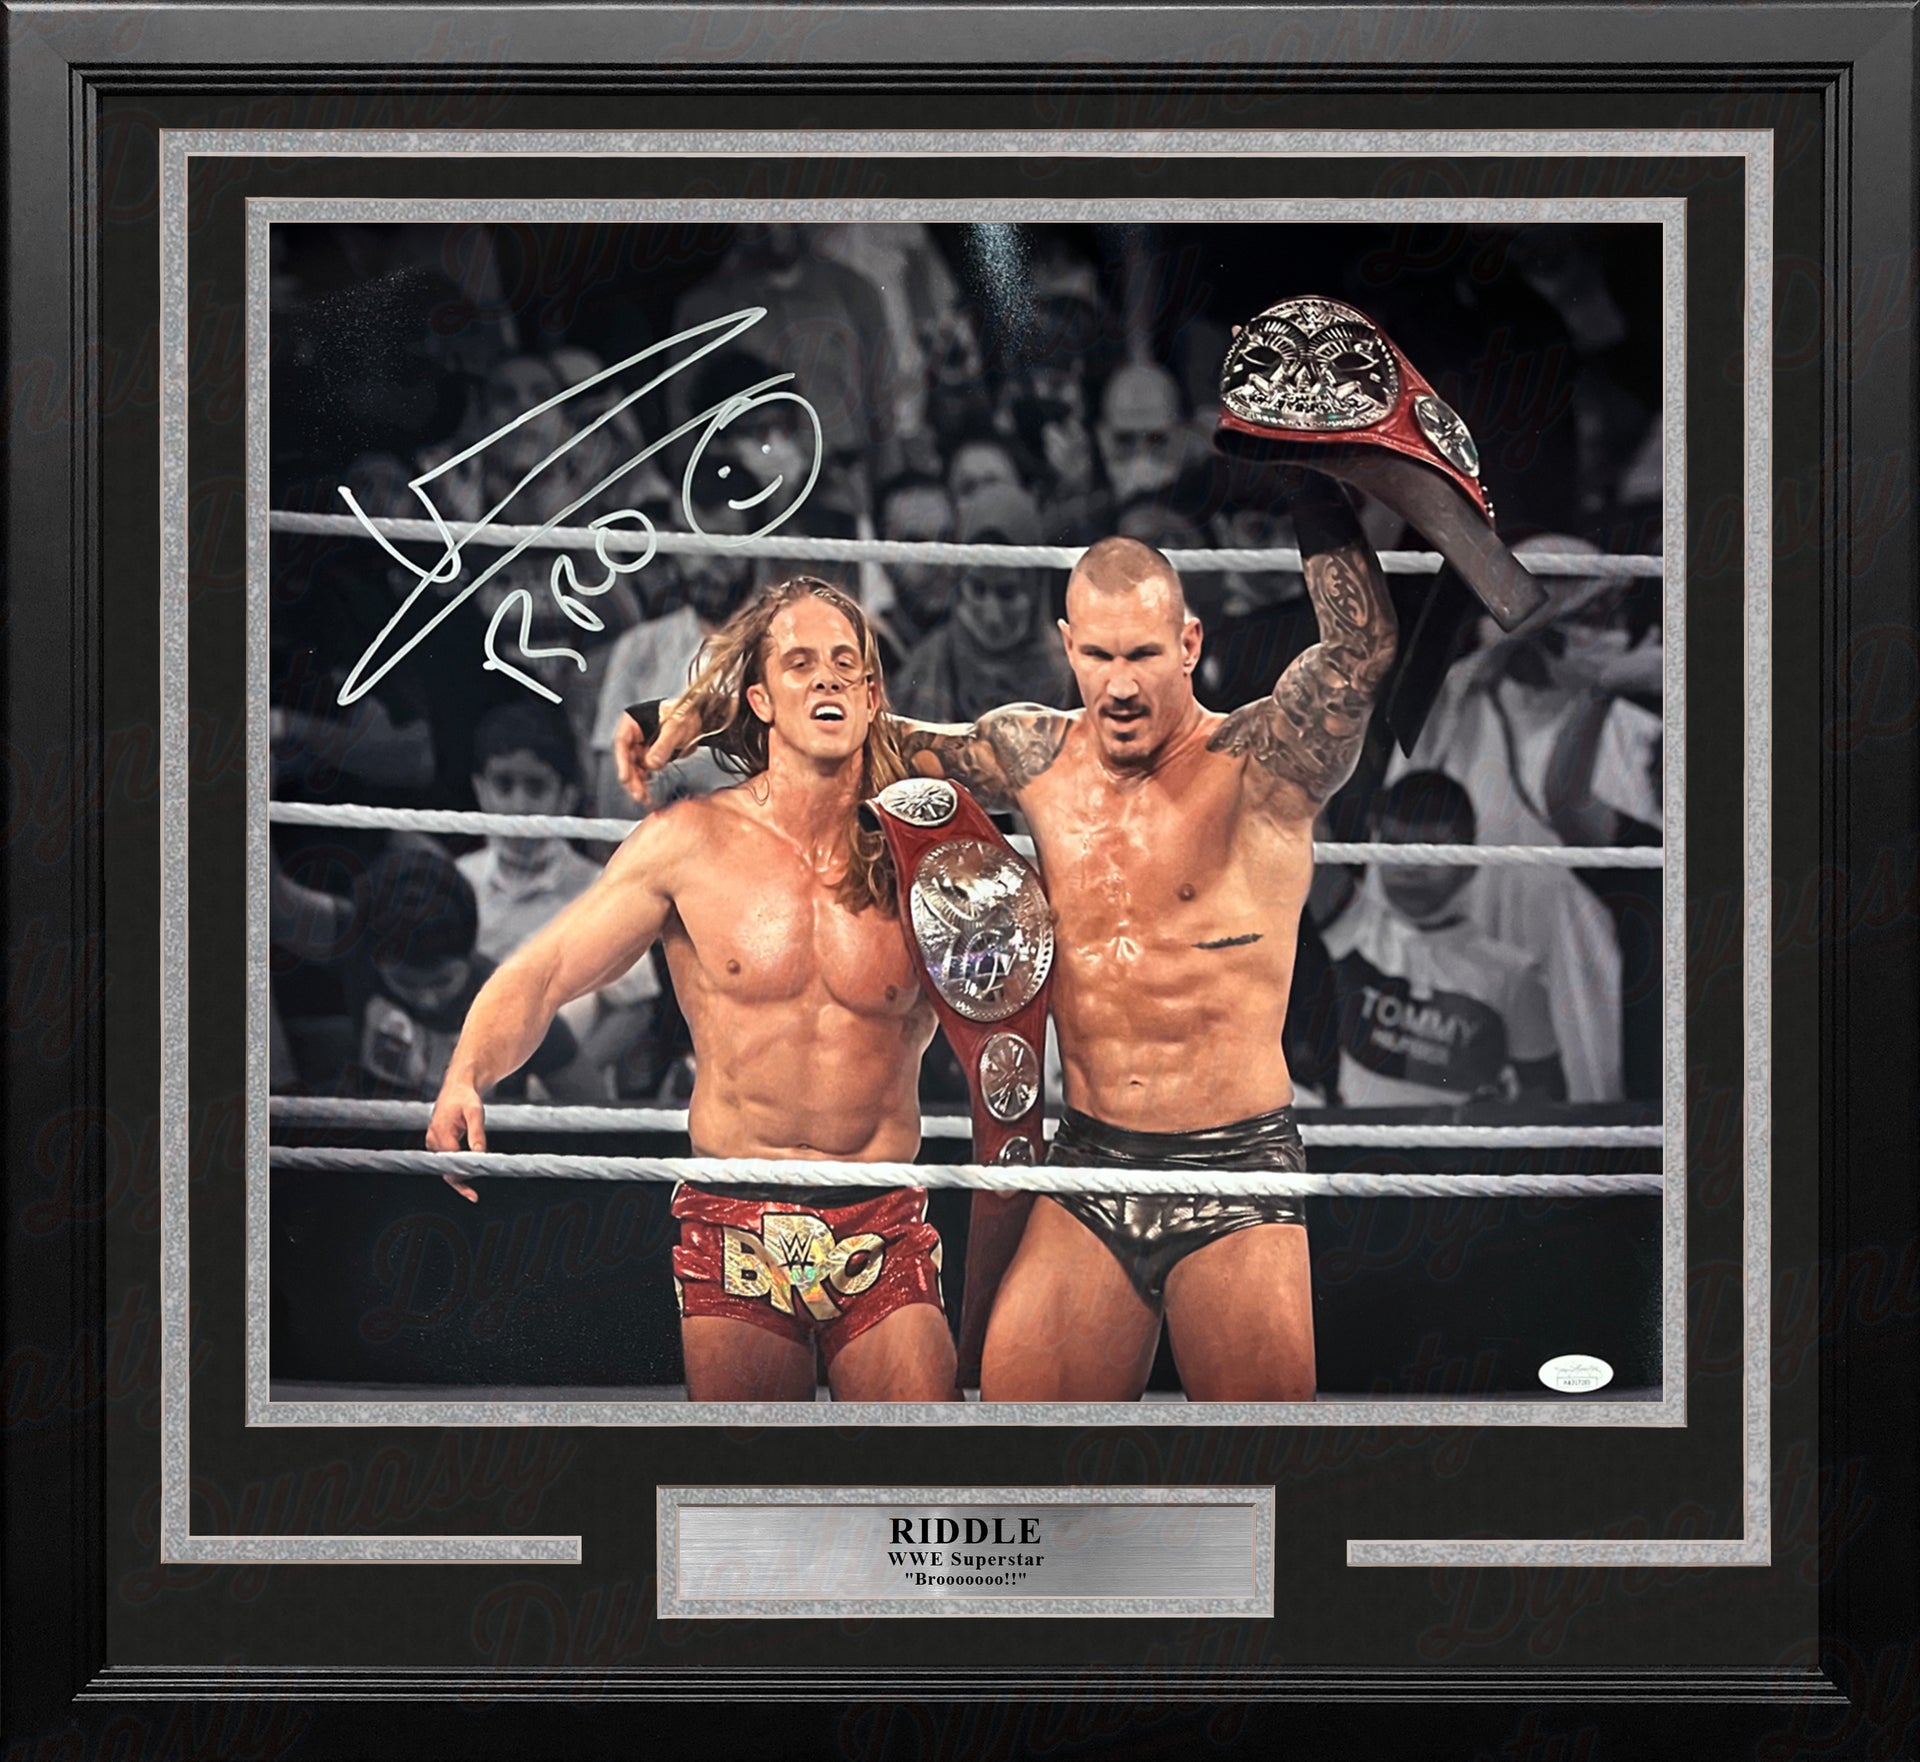 Riddle RK-Bro Autographed Framed WWE Wrestling Photo - Dynasty Sports & Framing 